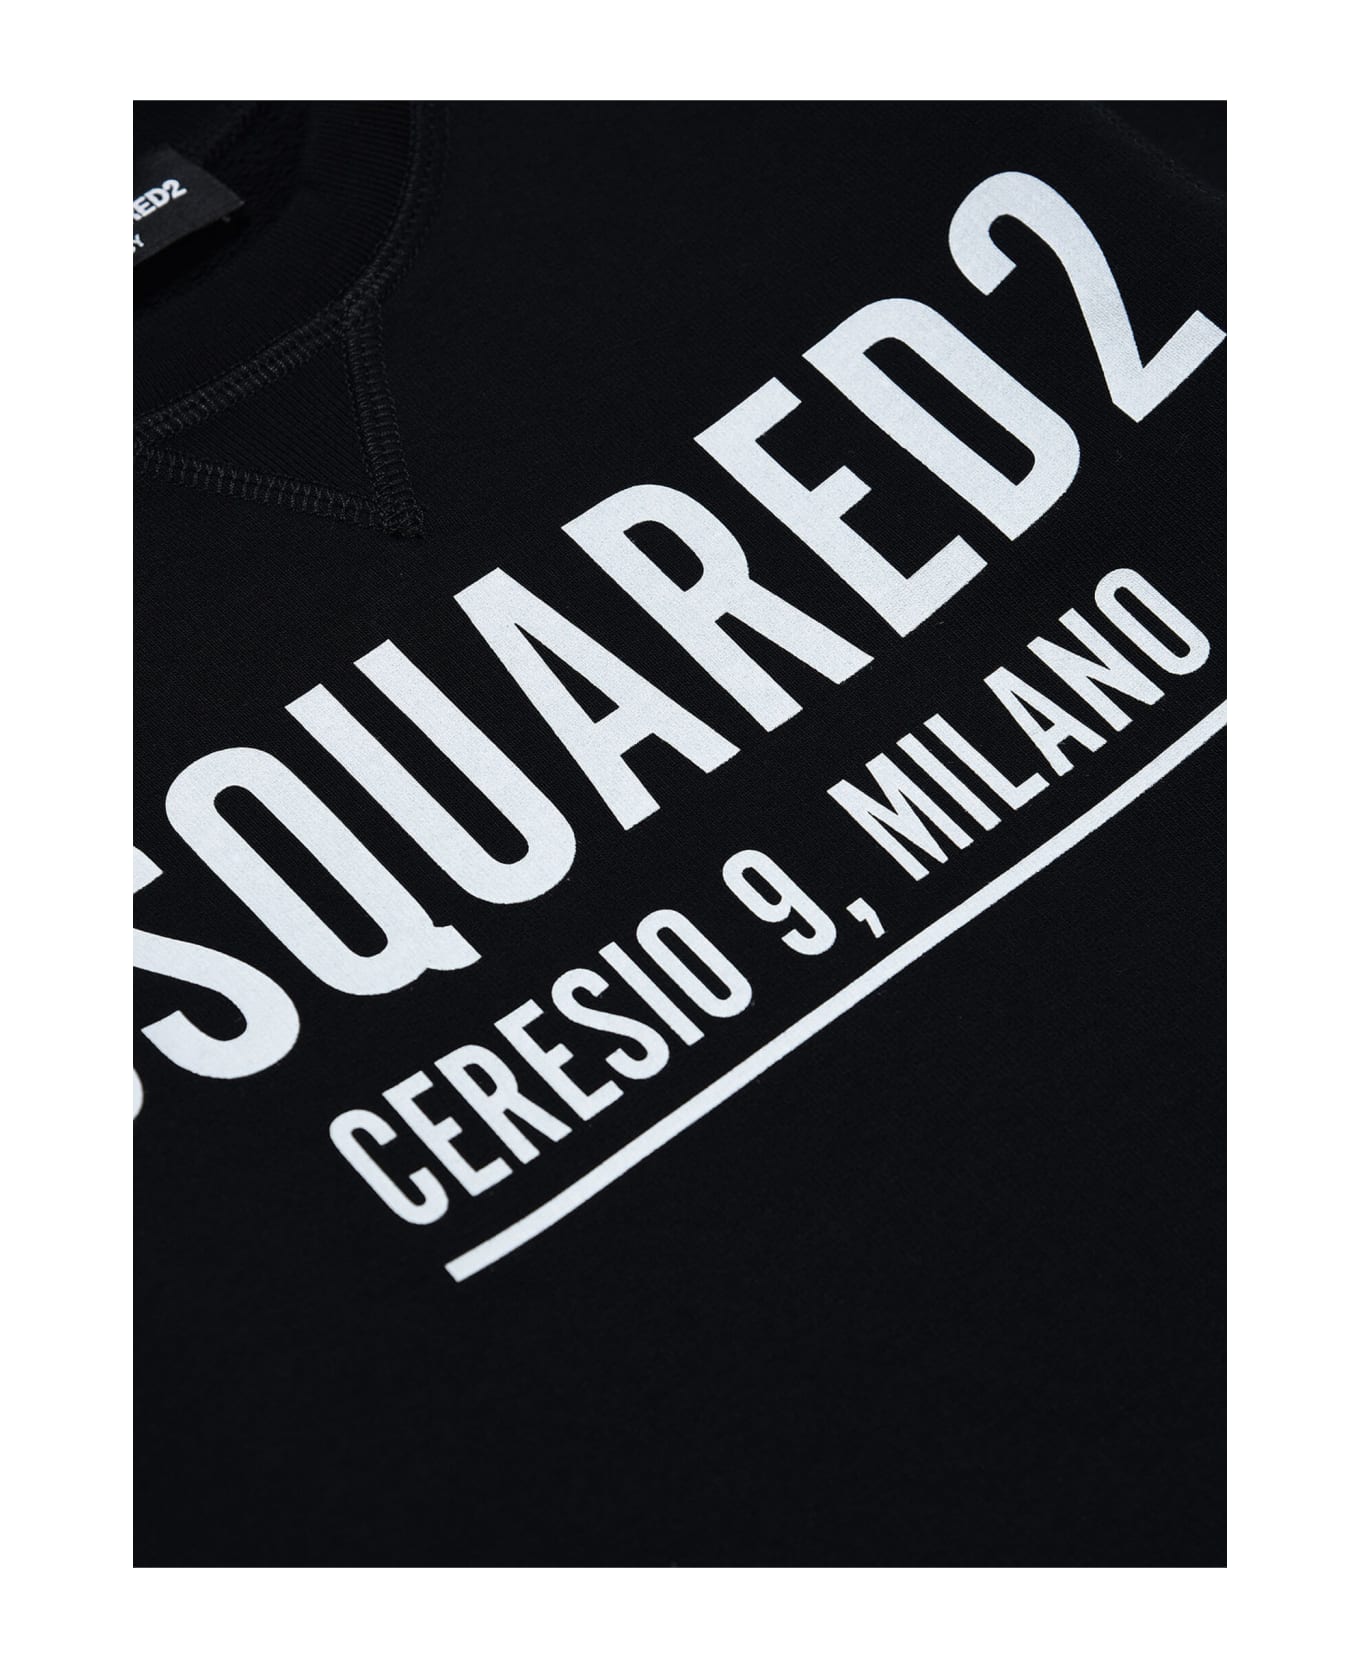 Dsquared2 D2s607u Relax Sweat-shirt Dsquared - Dq900